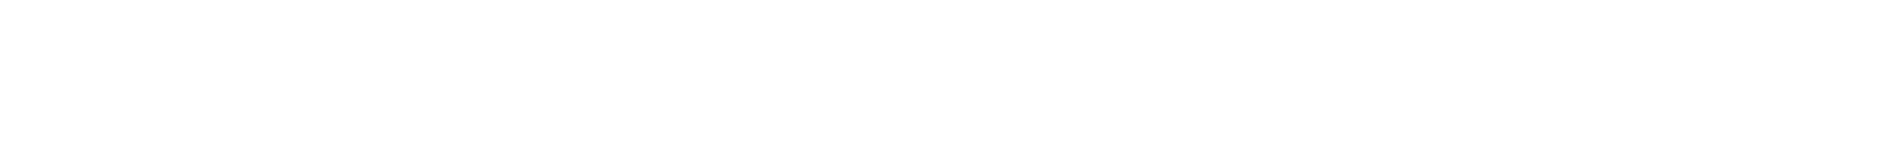 O.U.P.スポーツアカデミーのロゴ